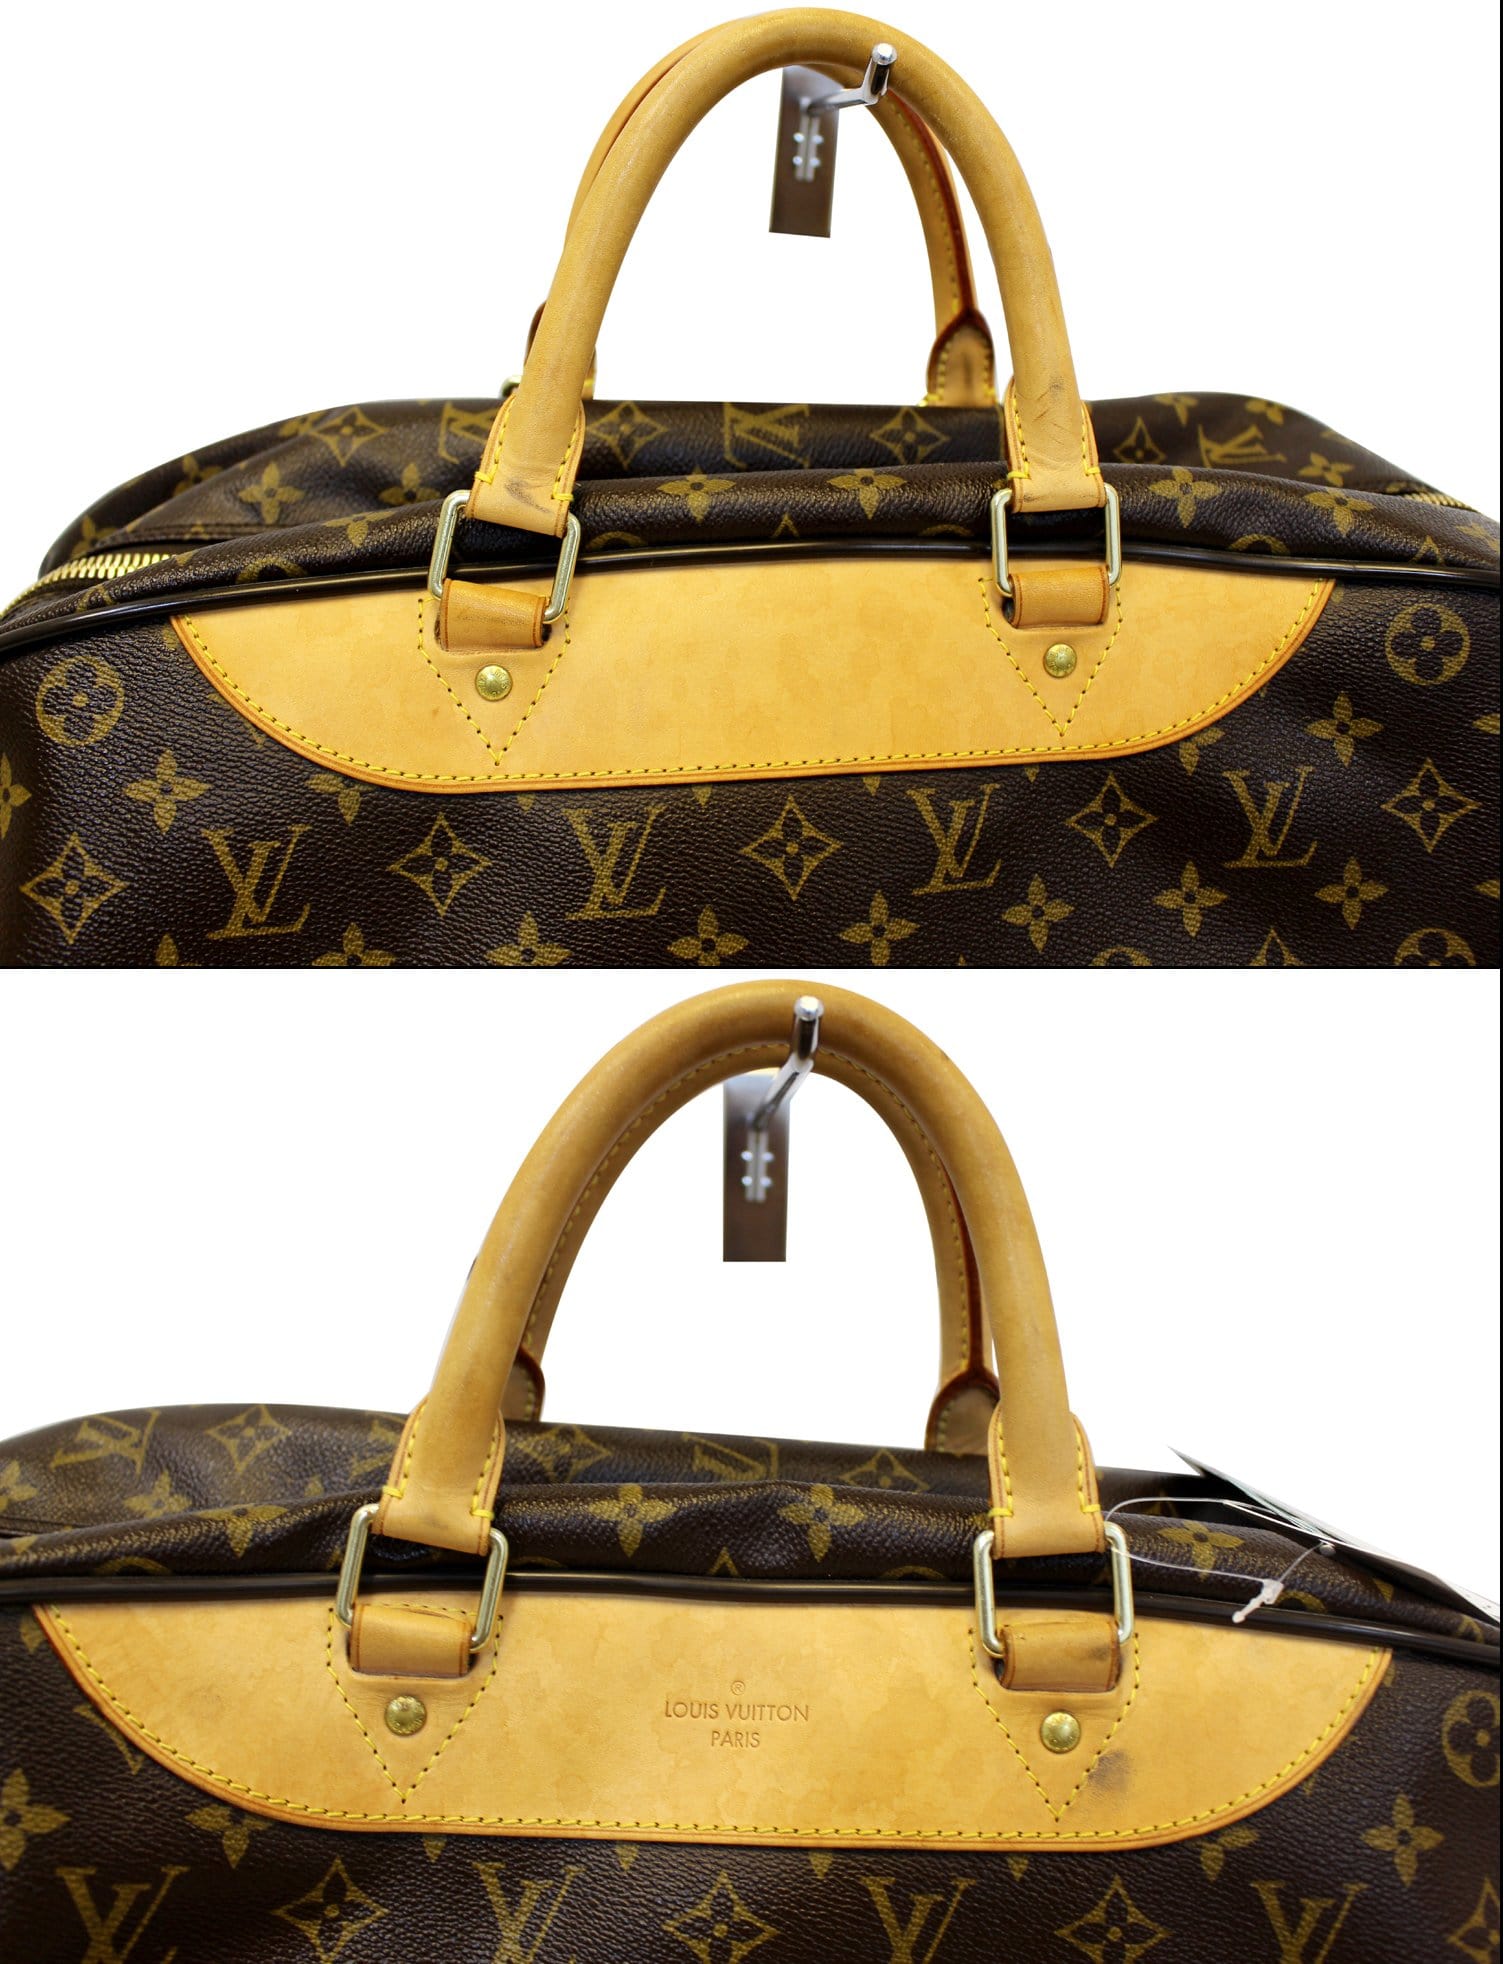 Sold at Auction: Louis Vuitton Monogram Eole Rolling Travel Bag 50